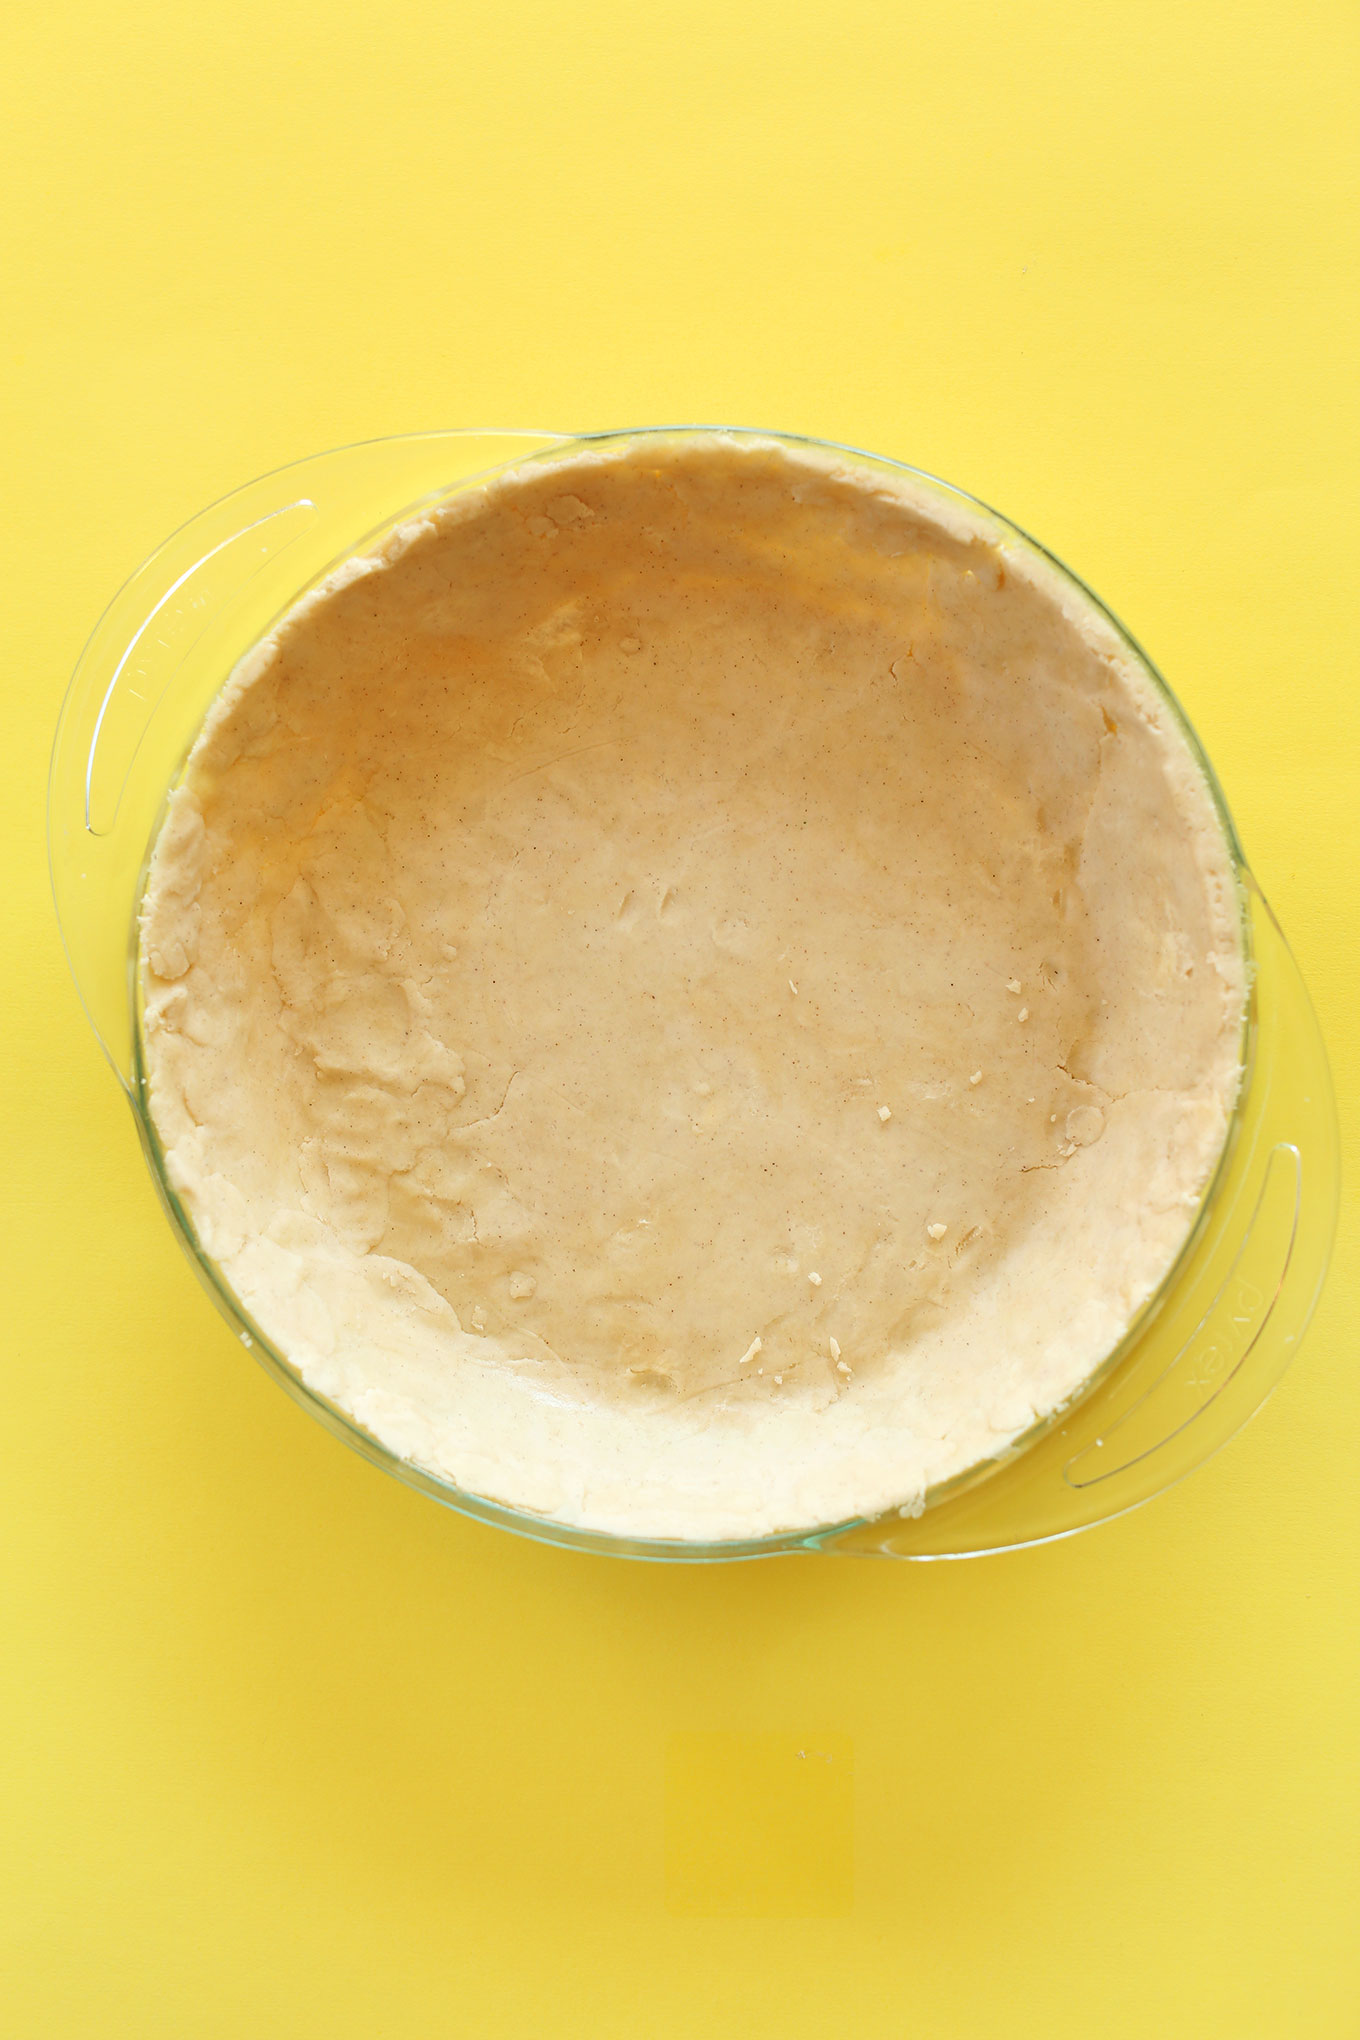 Gluten-free pie crust pressed into a pie pan